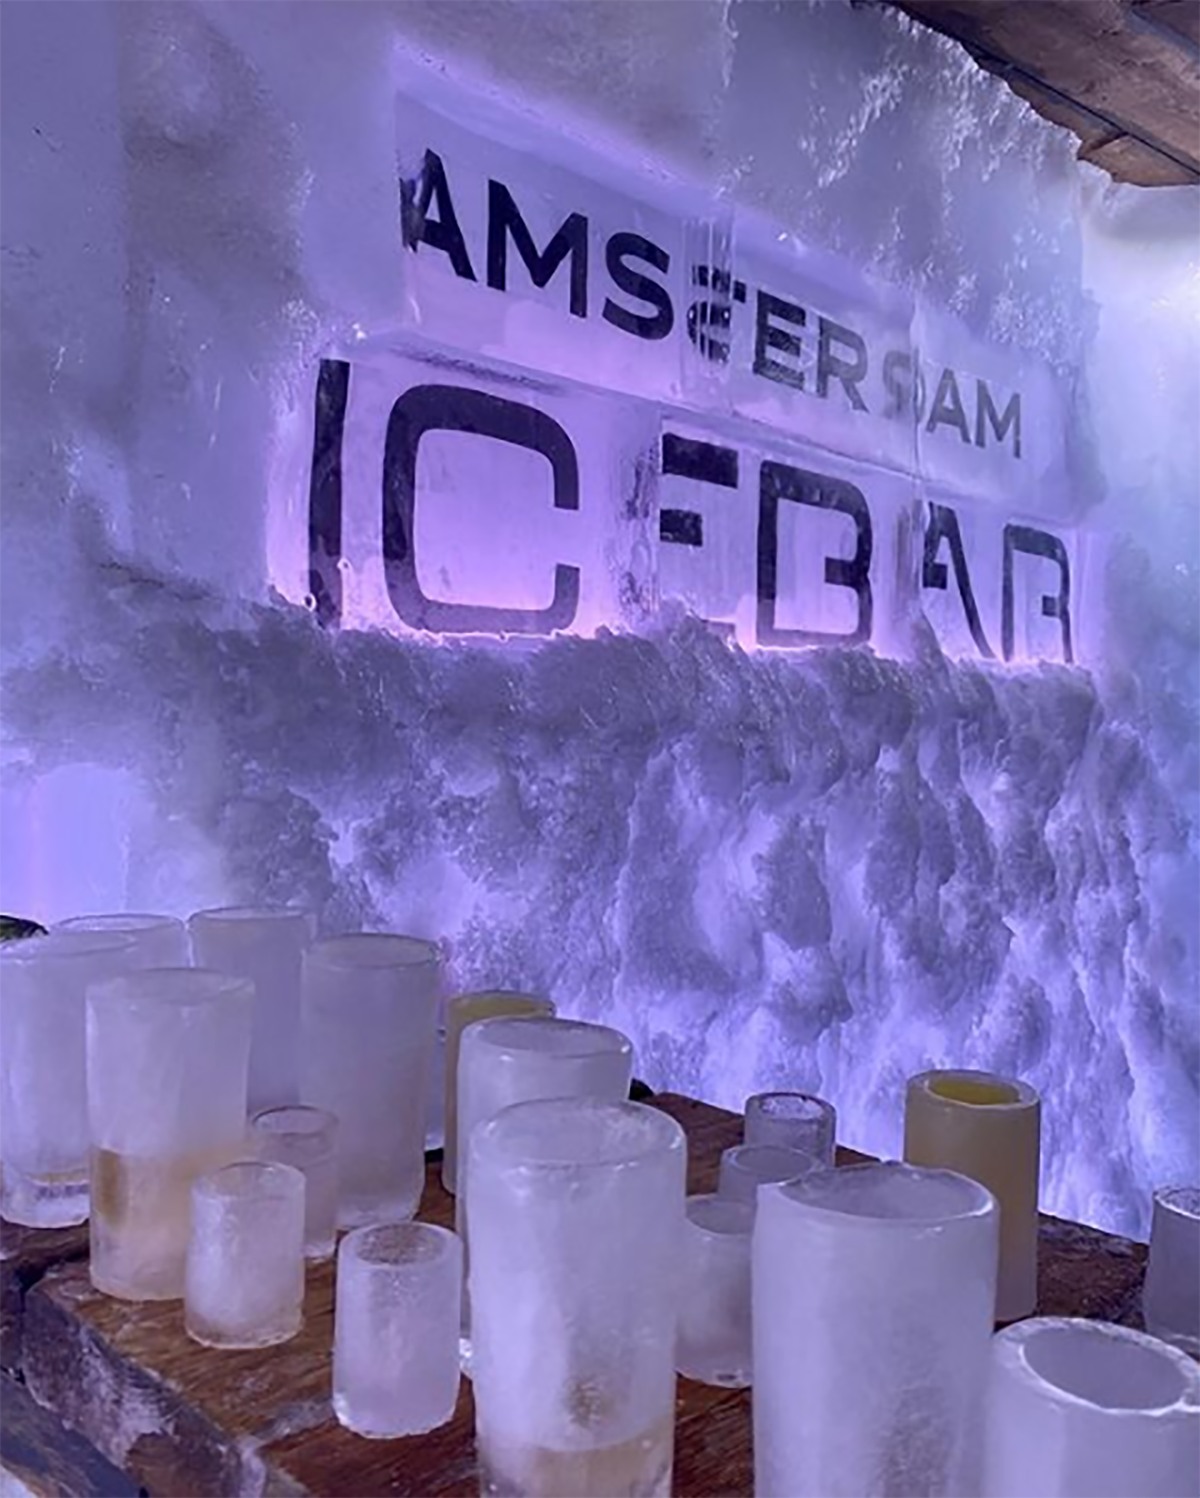 Xtracold Icebar Amsterdam